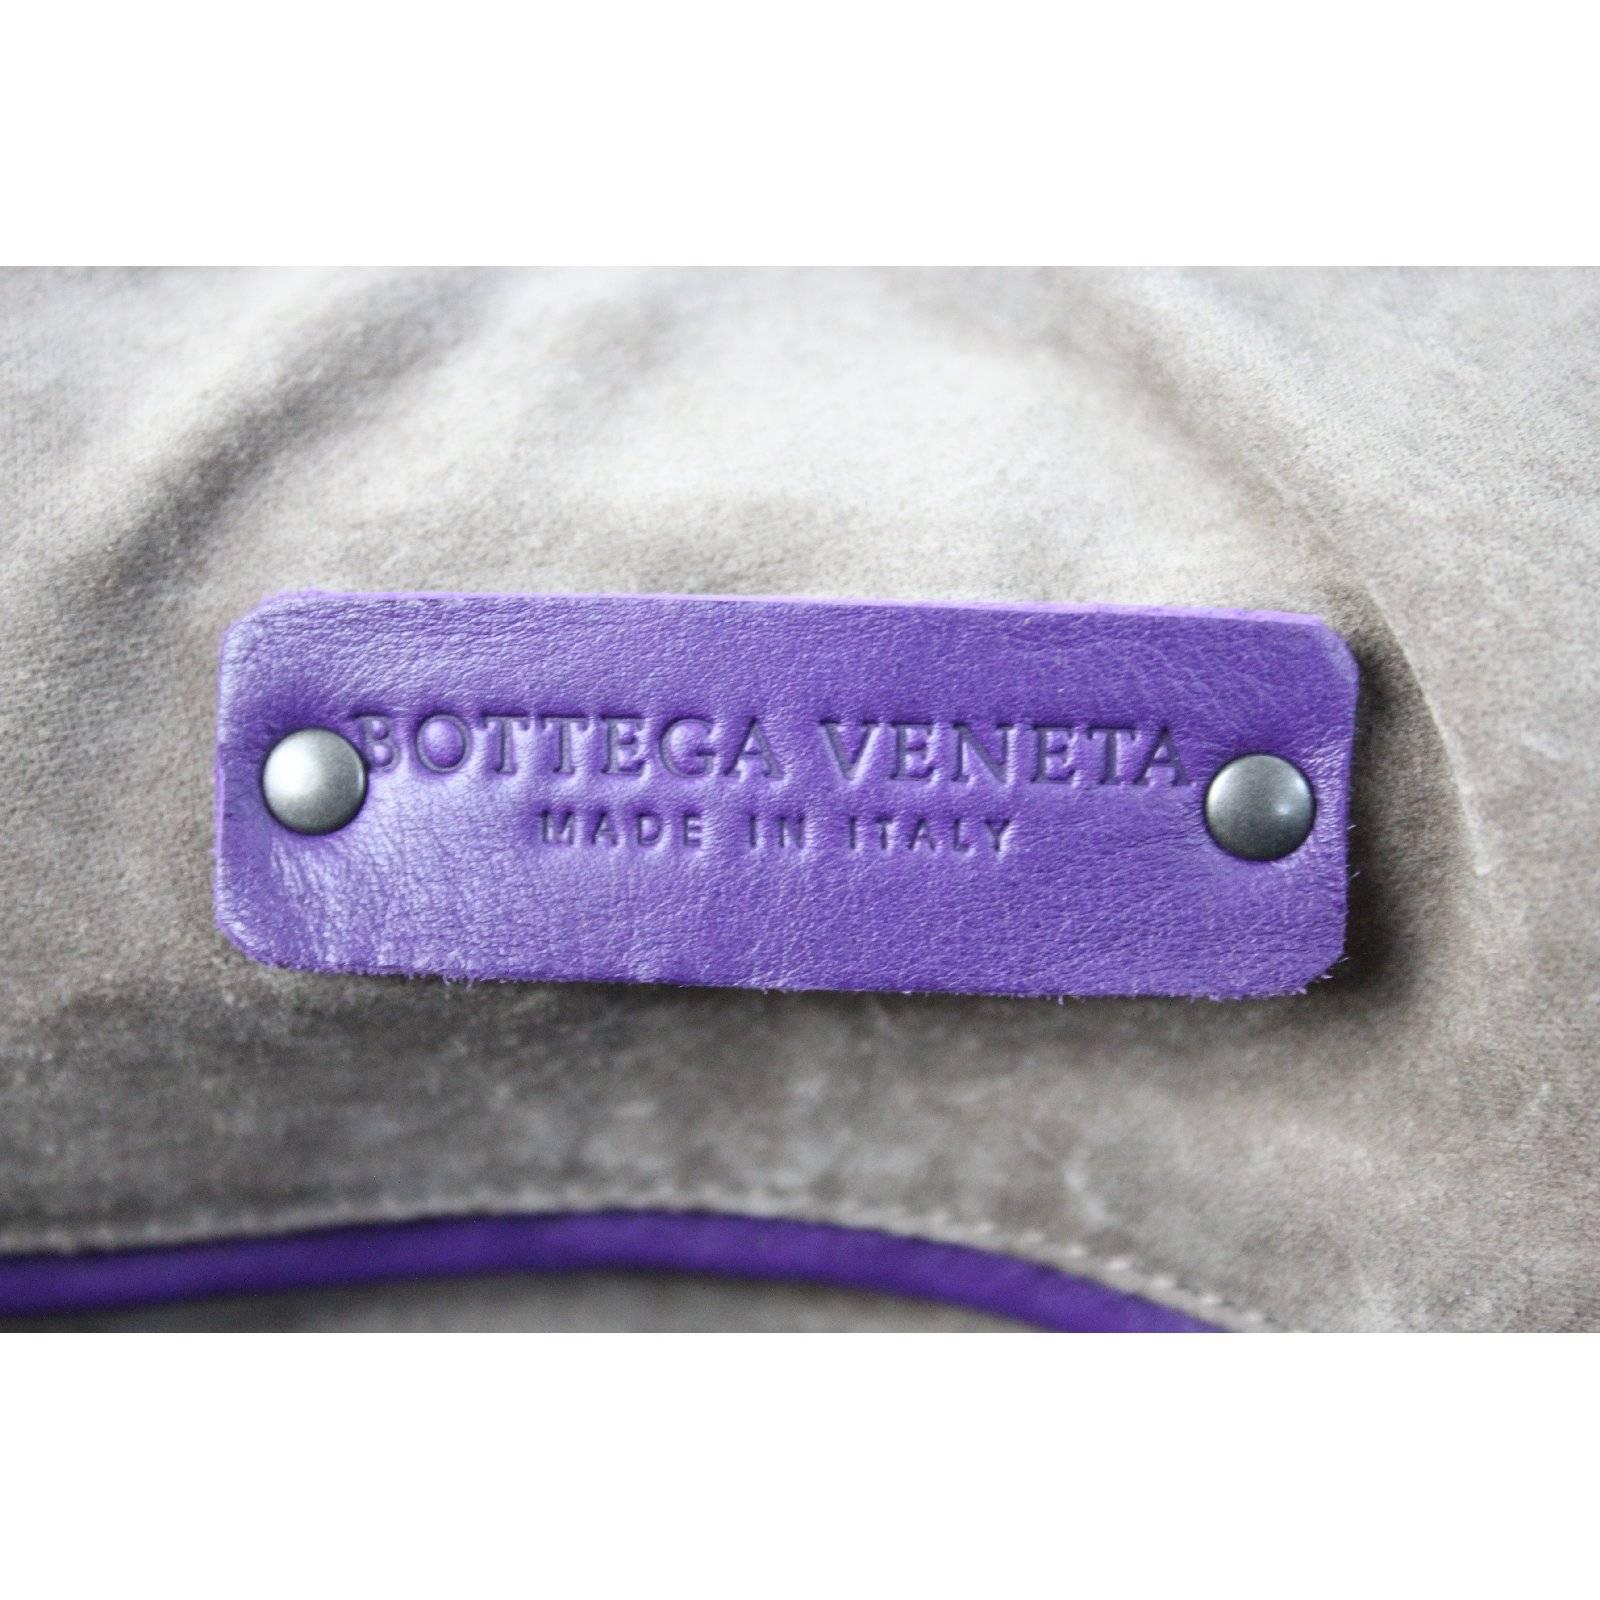 Bottega Veneta Boston leather purple handbag bag 2003s like new made in italy 3